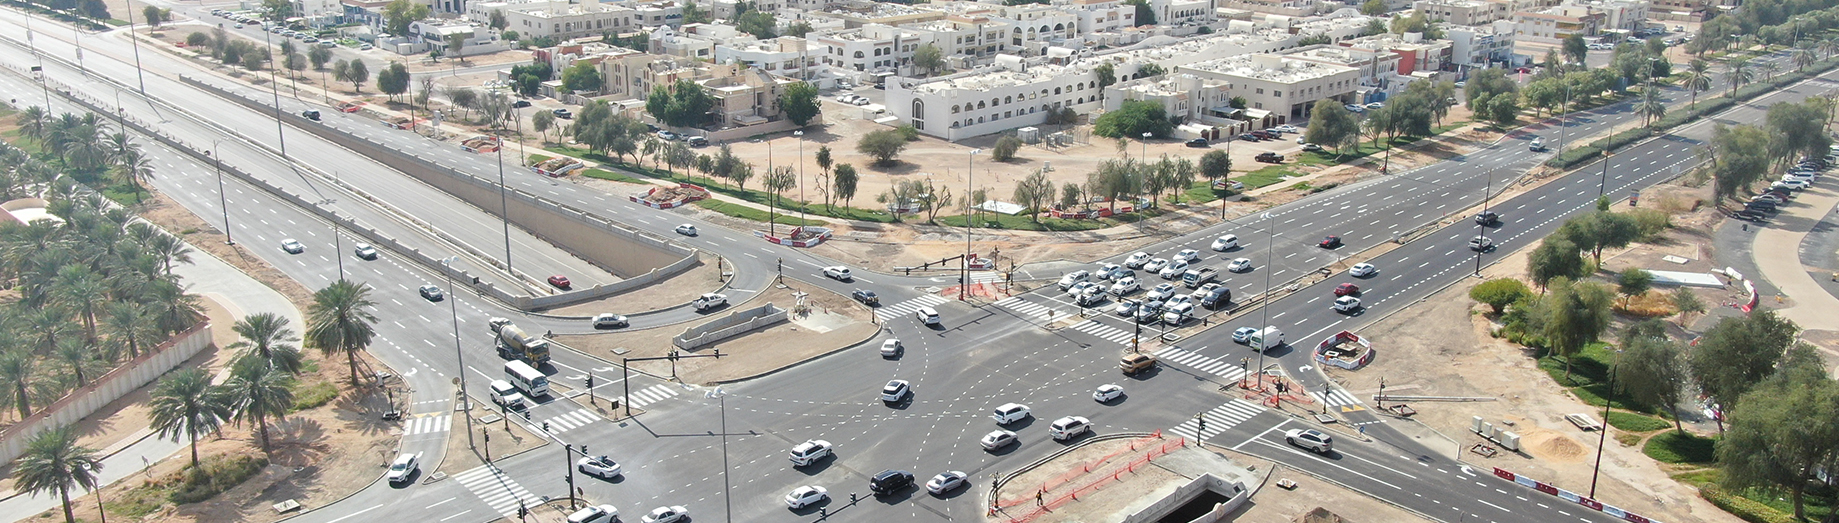 Al Ain Stadium Traffic Movement Improvement